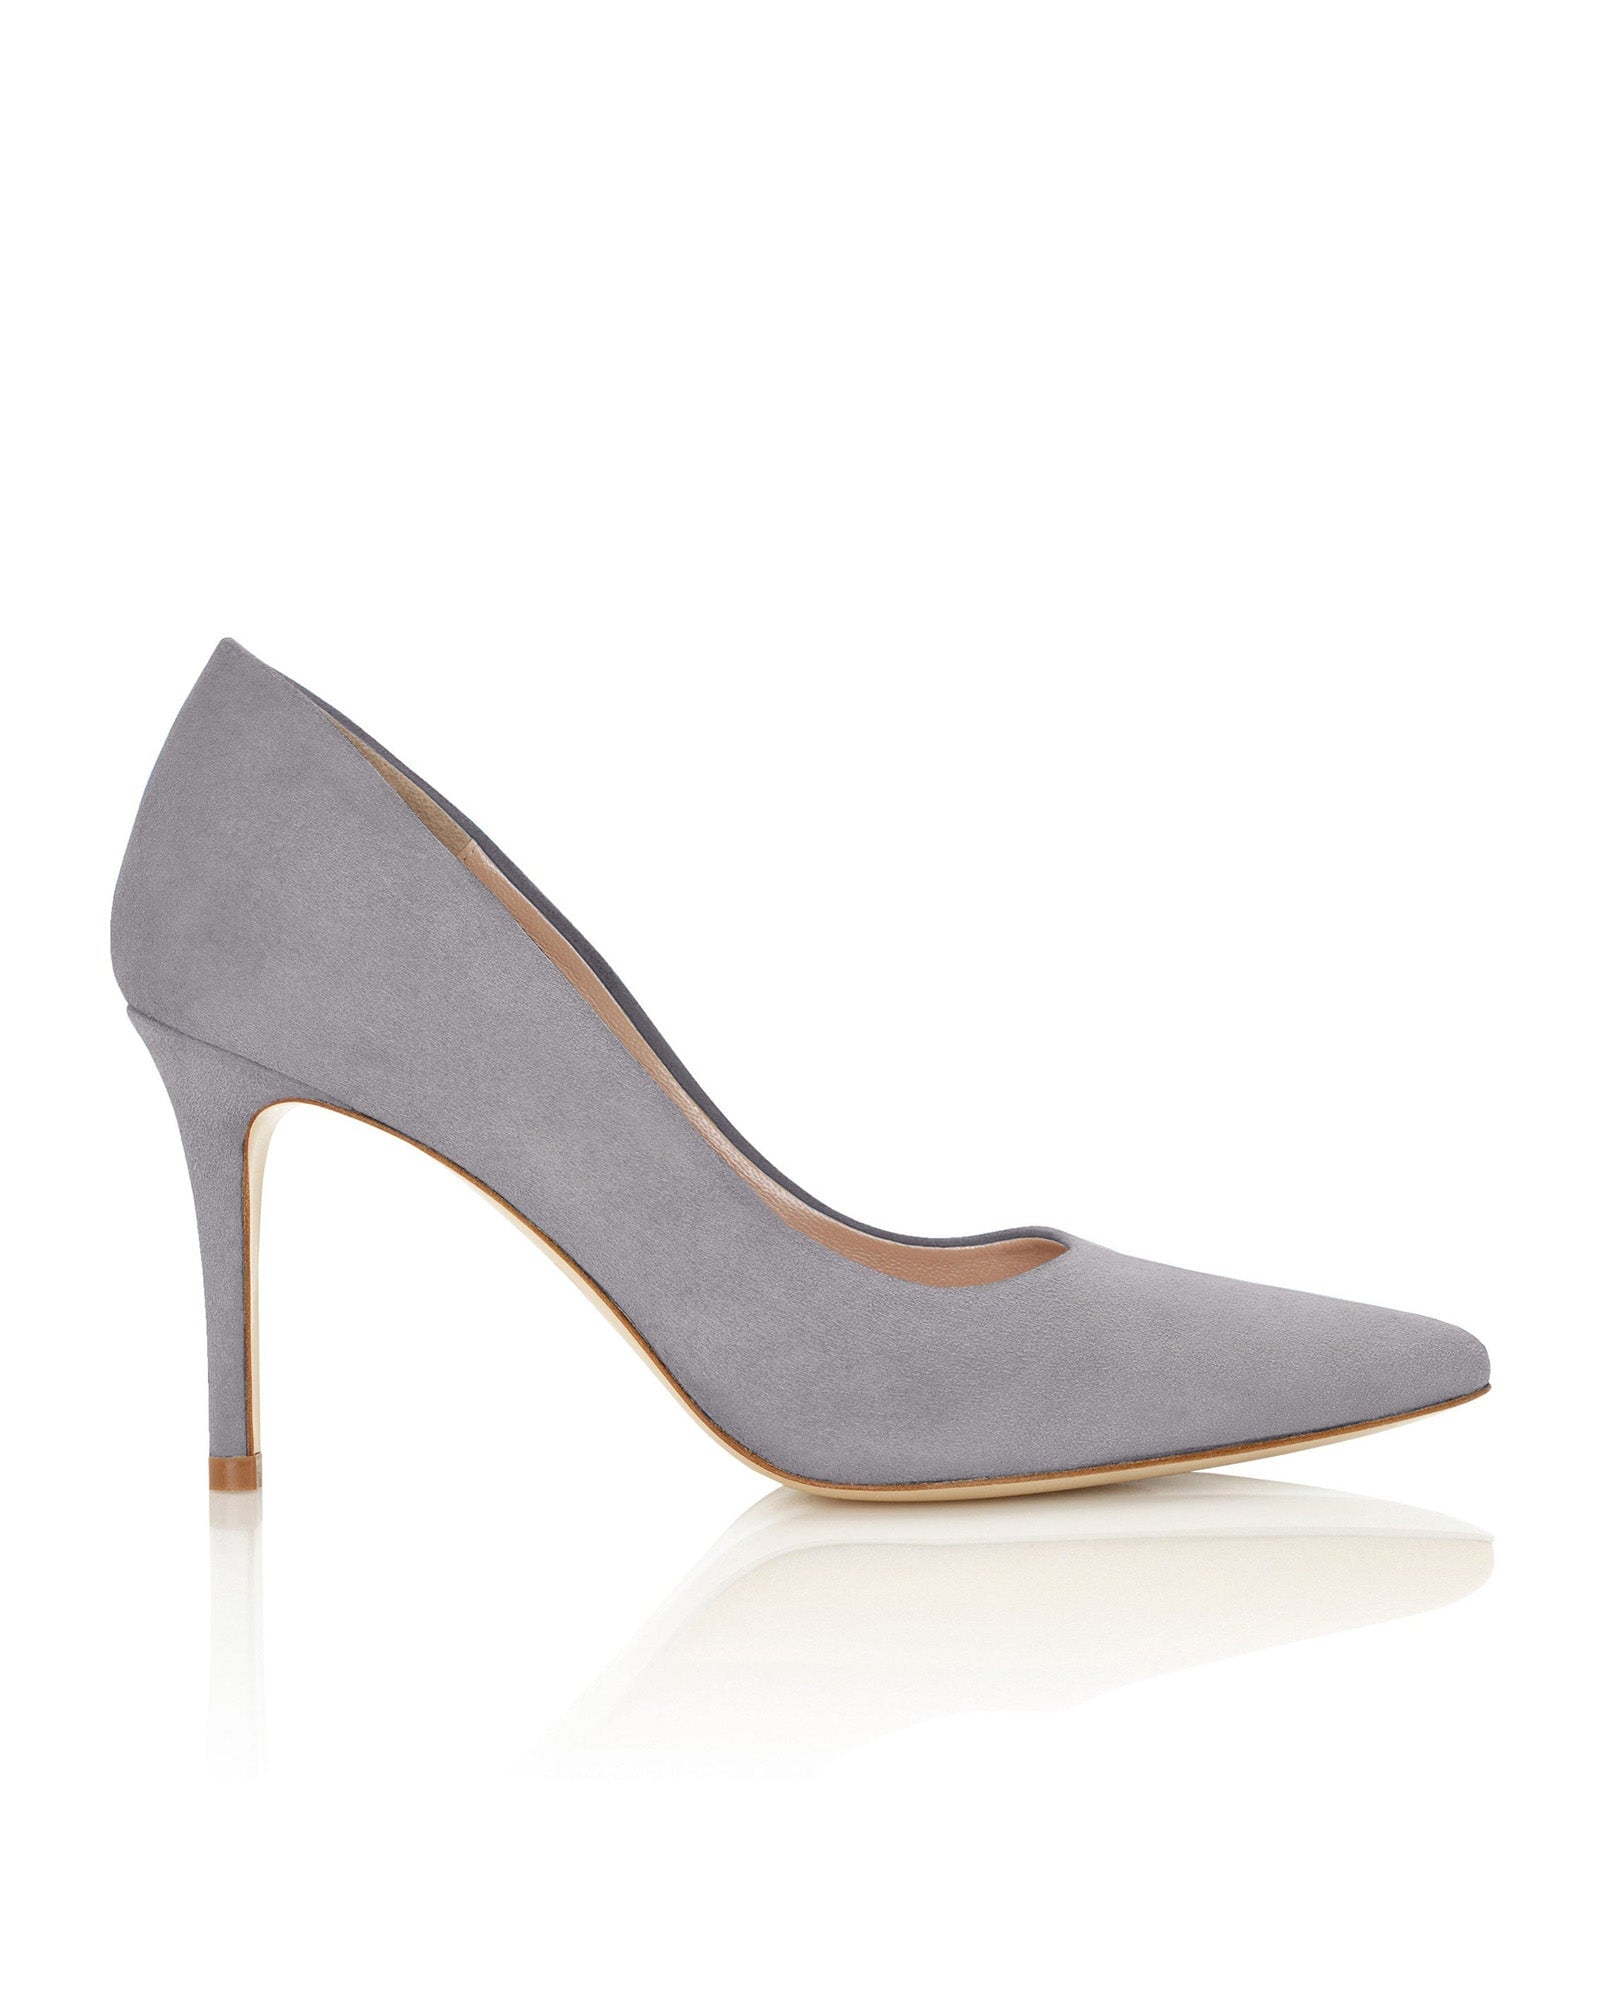 Claudia Steel Fashion Shoe Grey Pointed Court Shoe  image